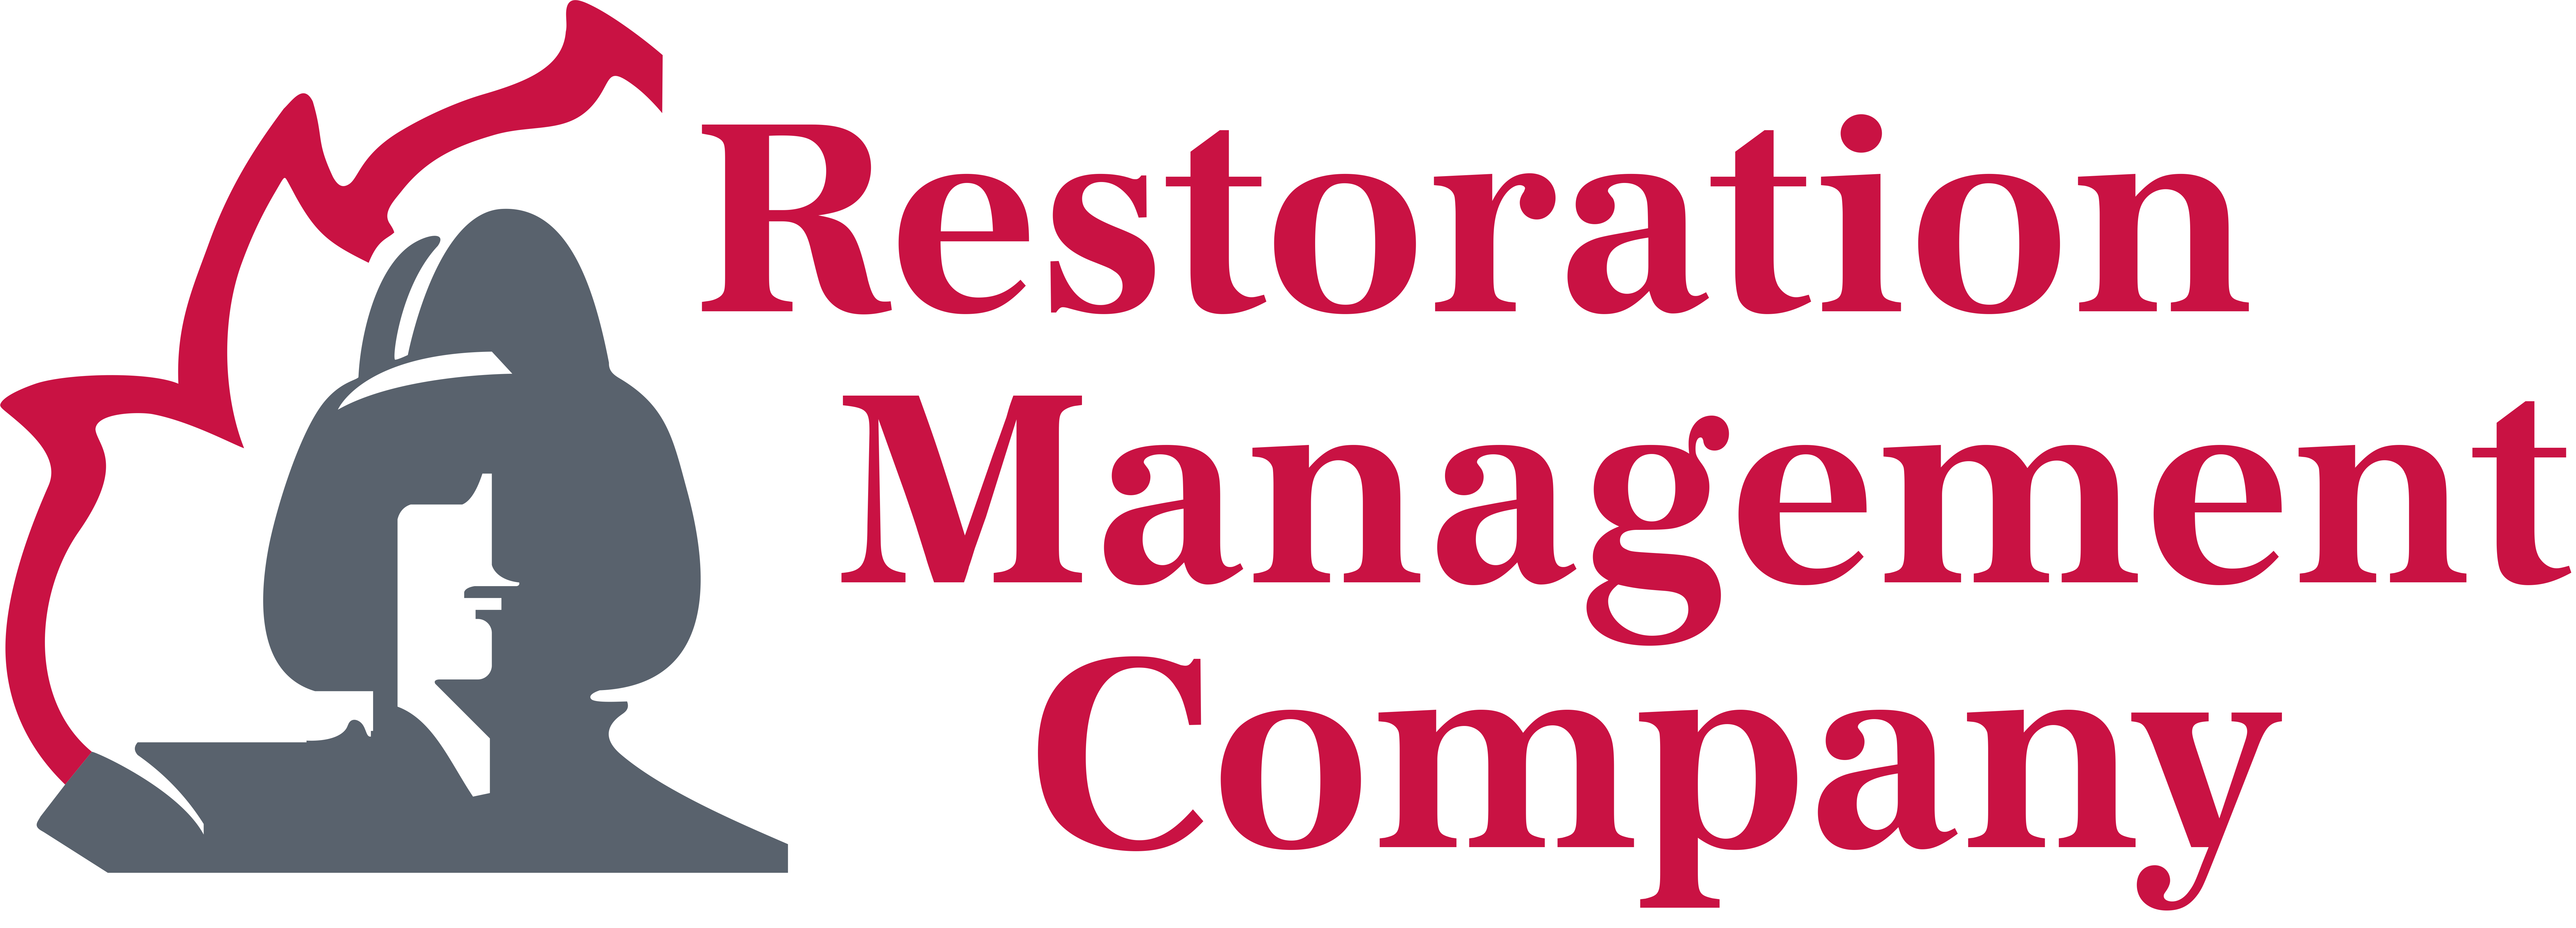 Restoration Management Company Company Logo